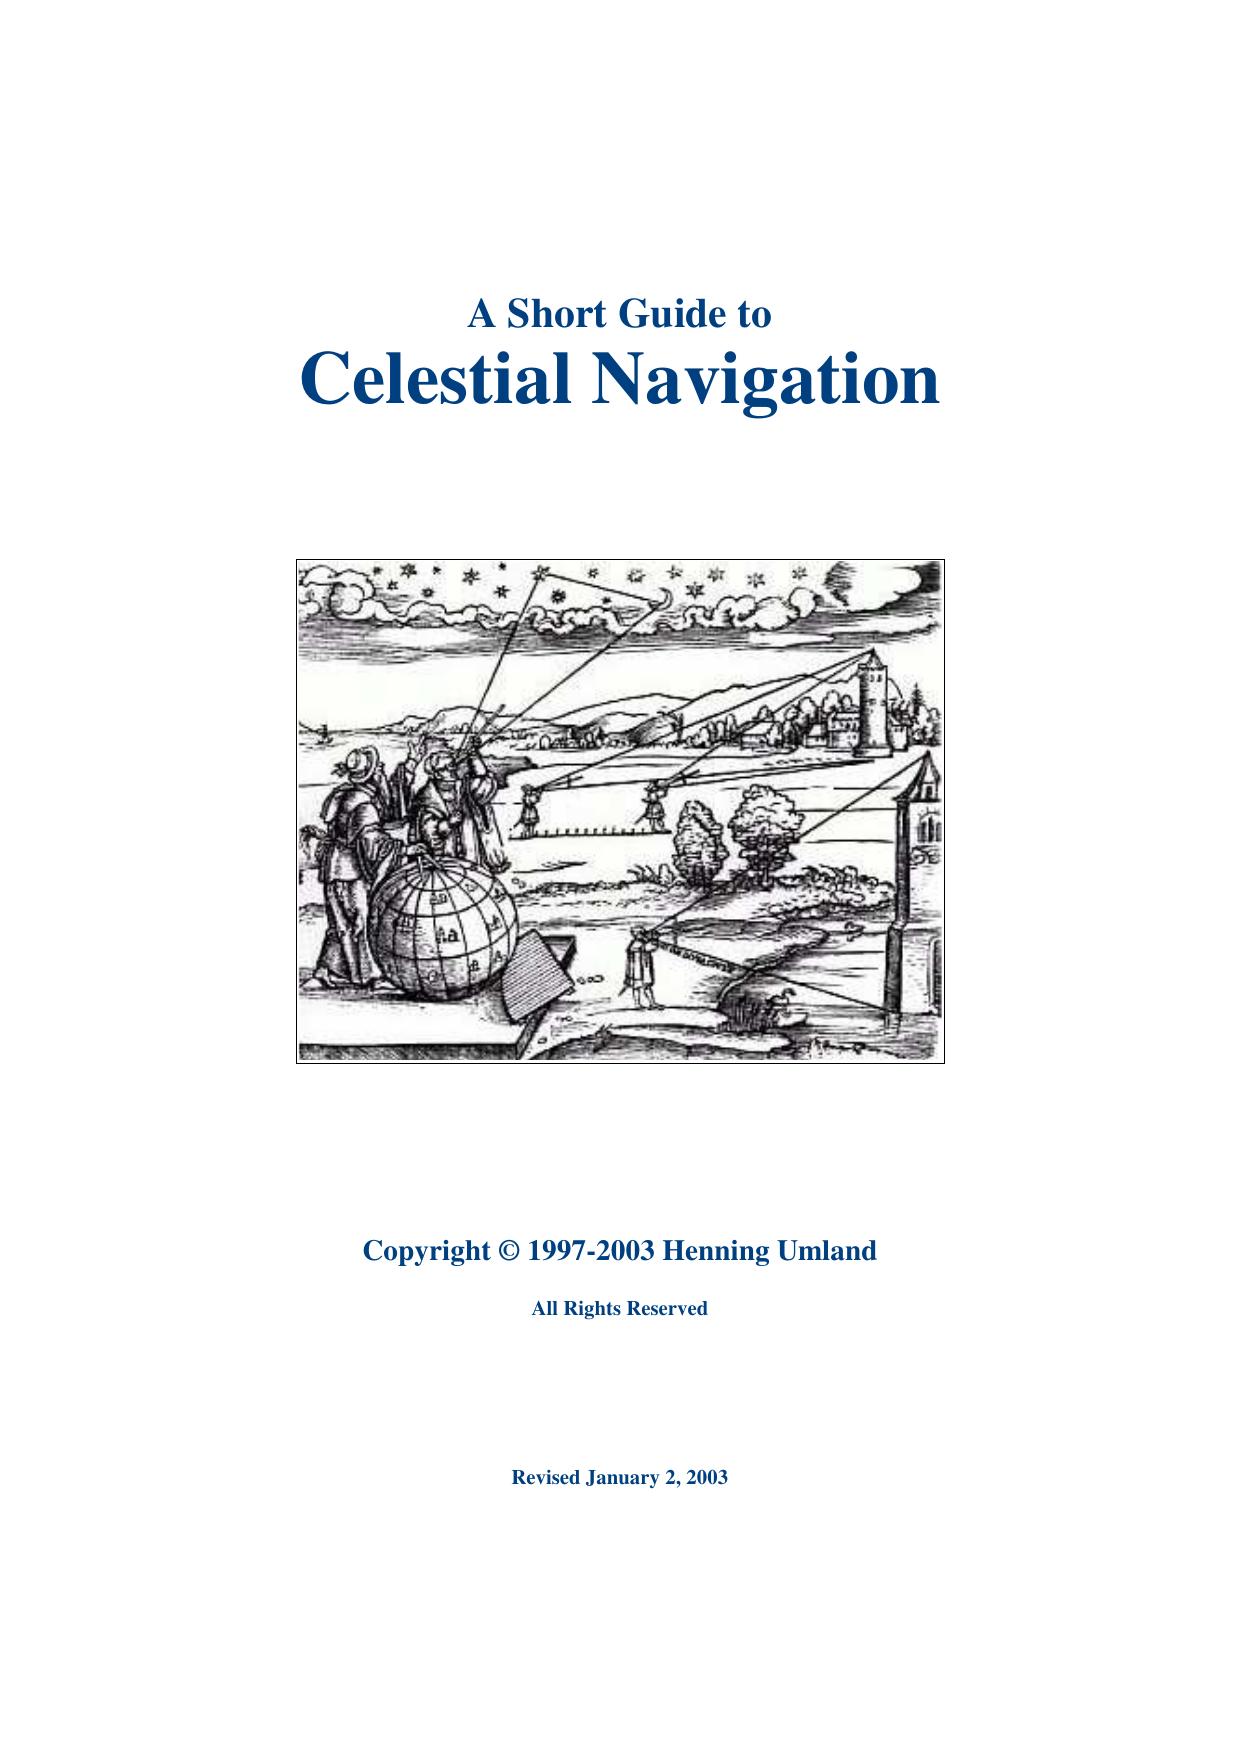 A Short Guide to Celestial Navigation